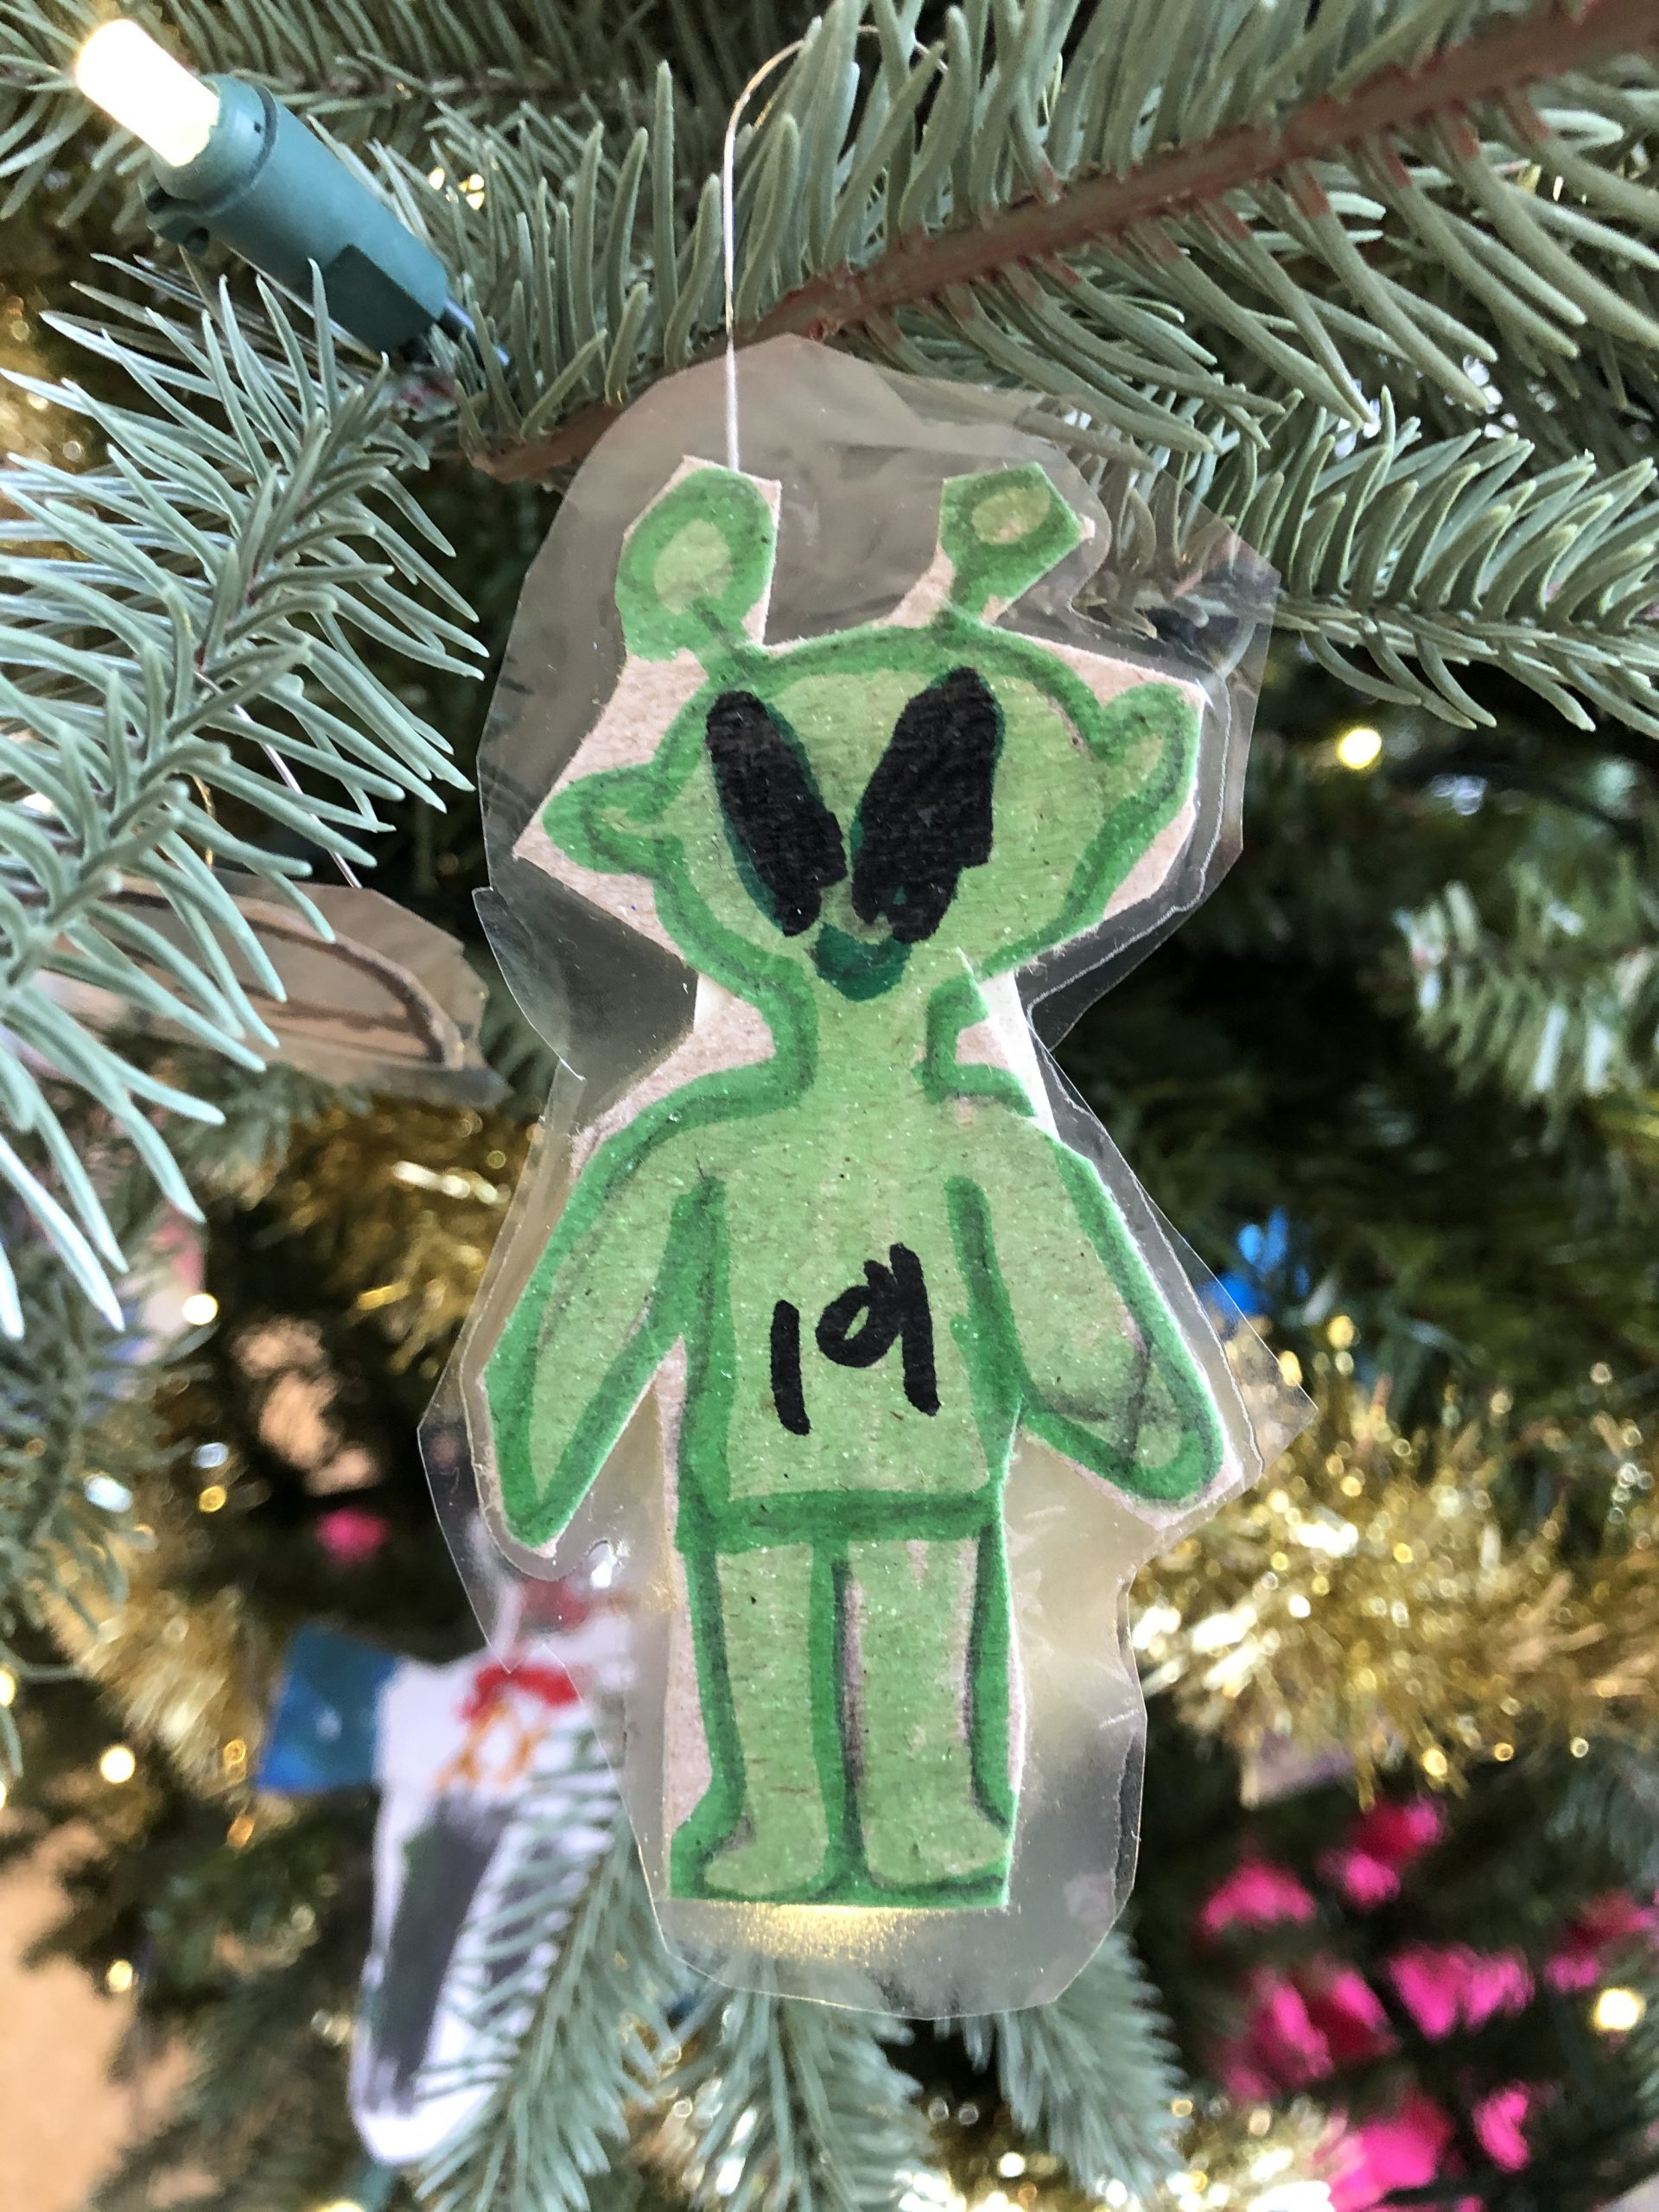 Skipwith Elementary School Alien holiday decoration